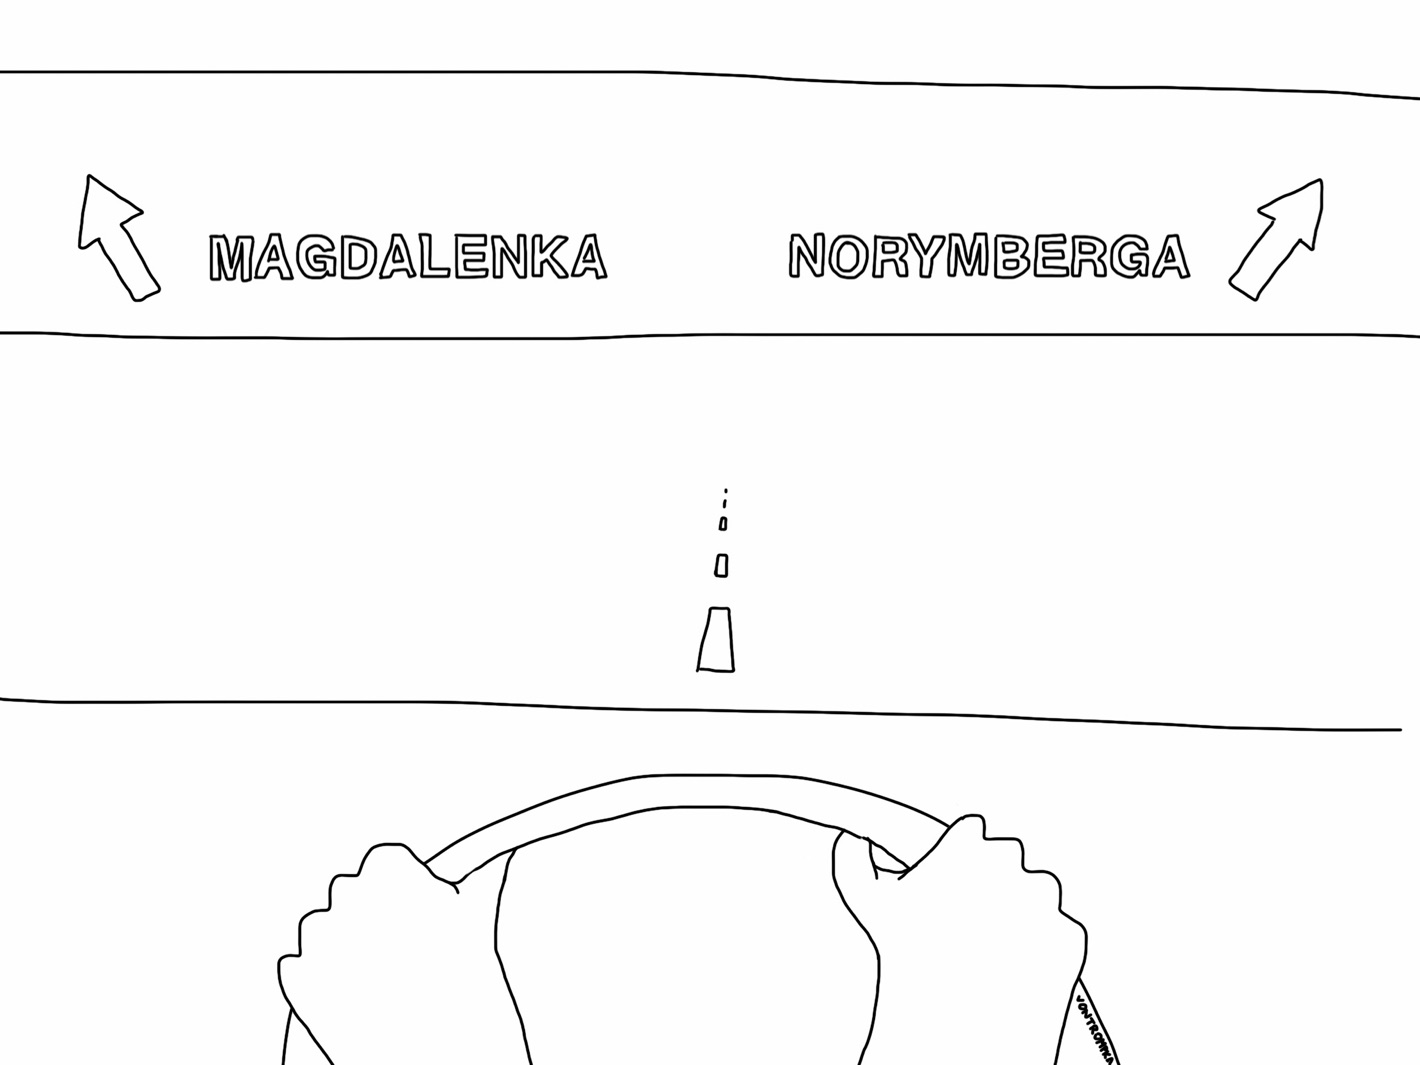 magdalenka norymberga